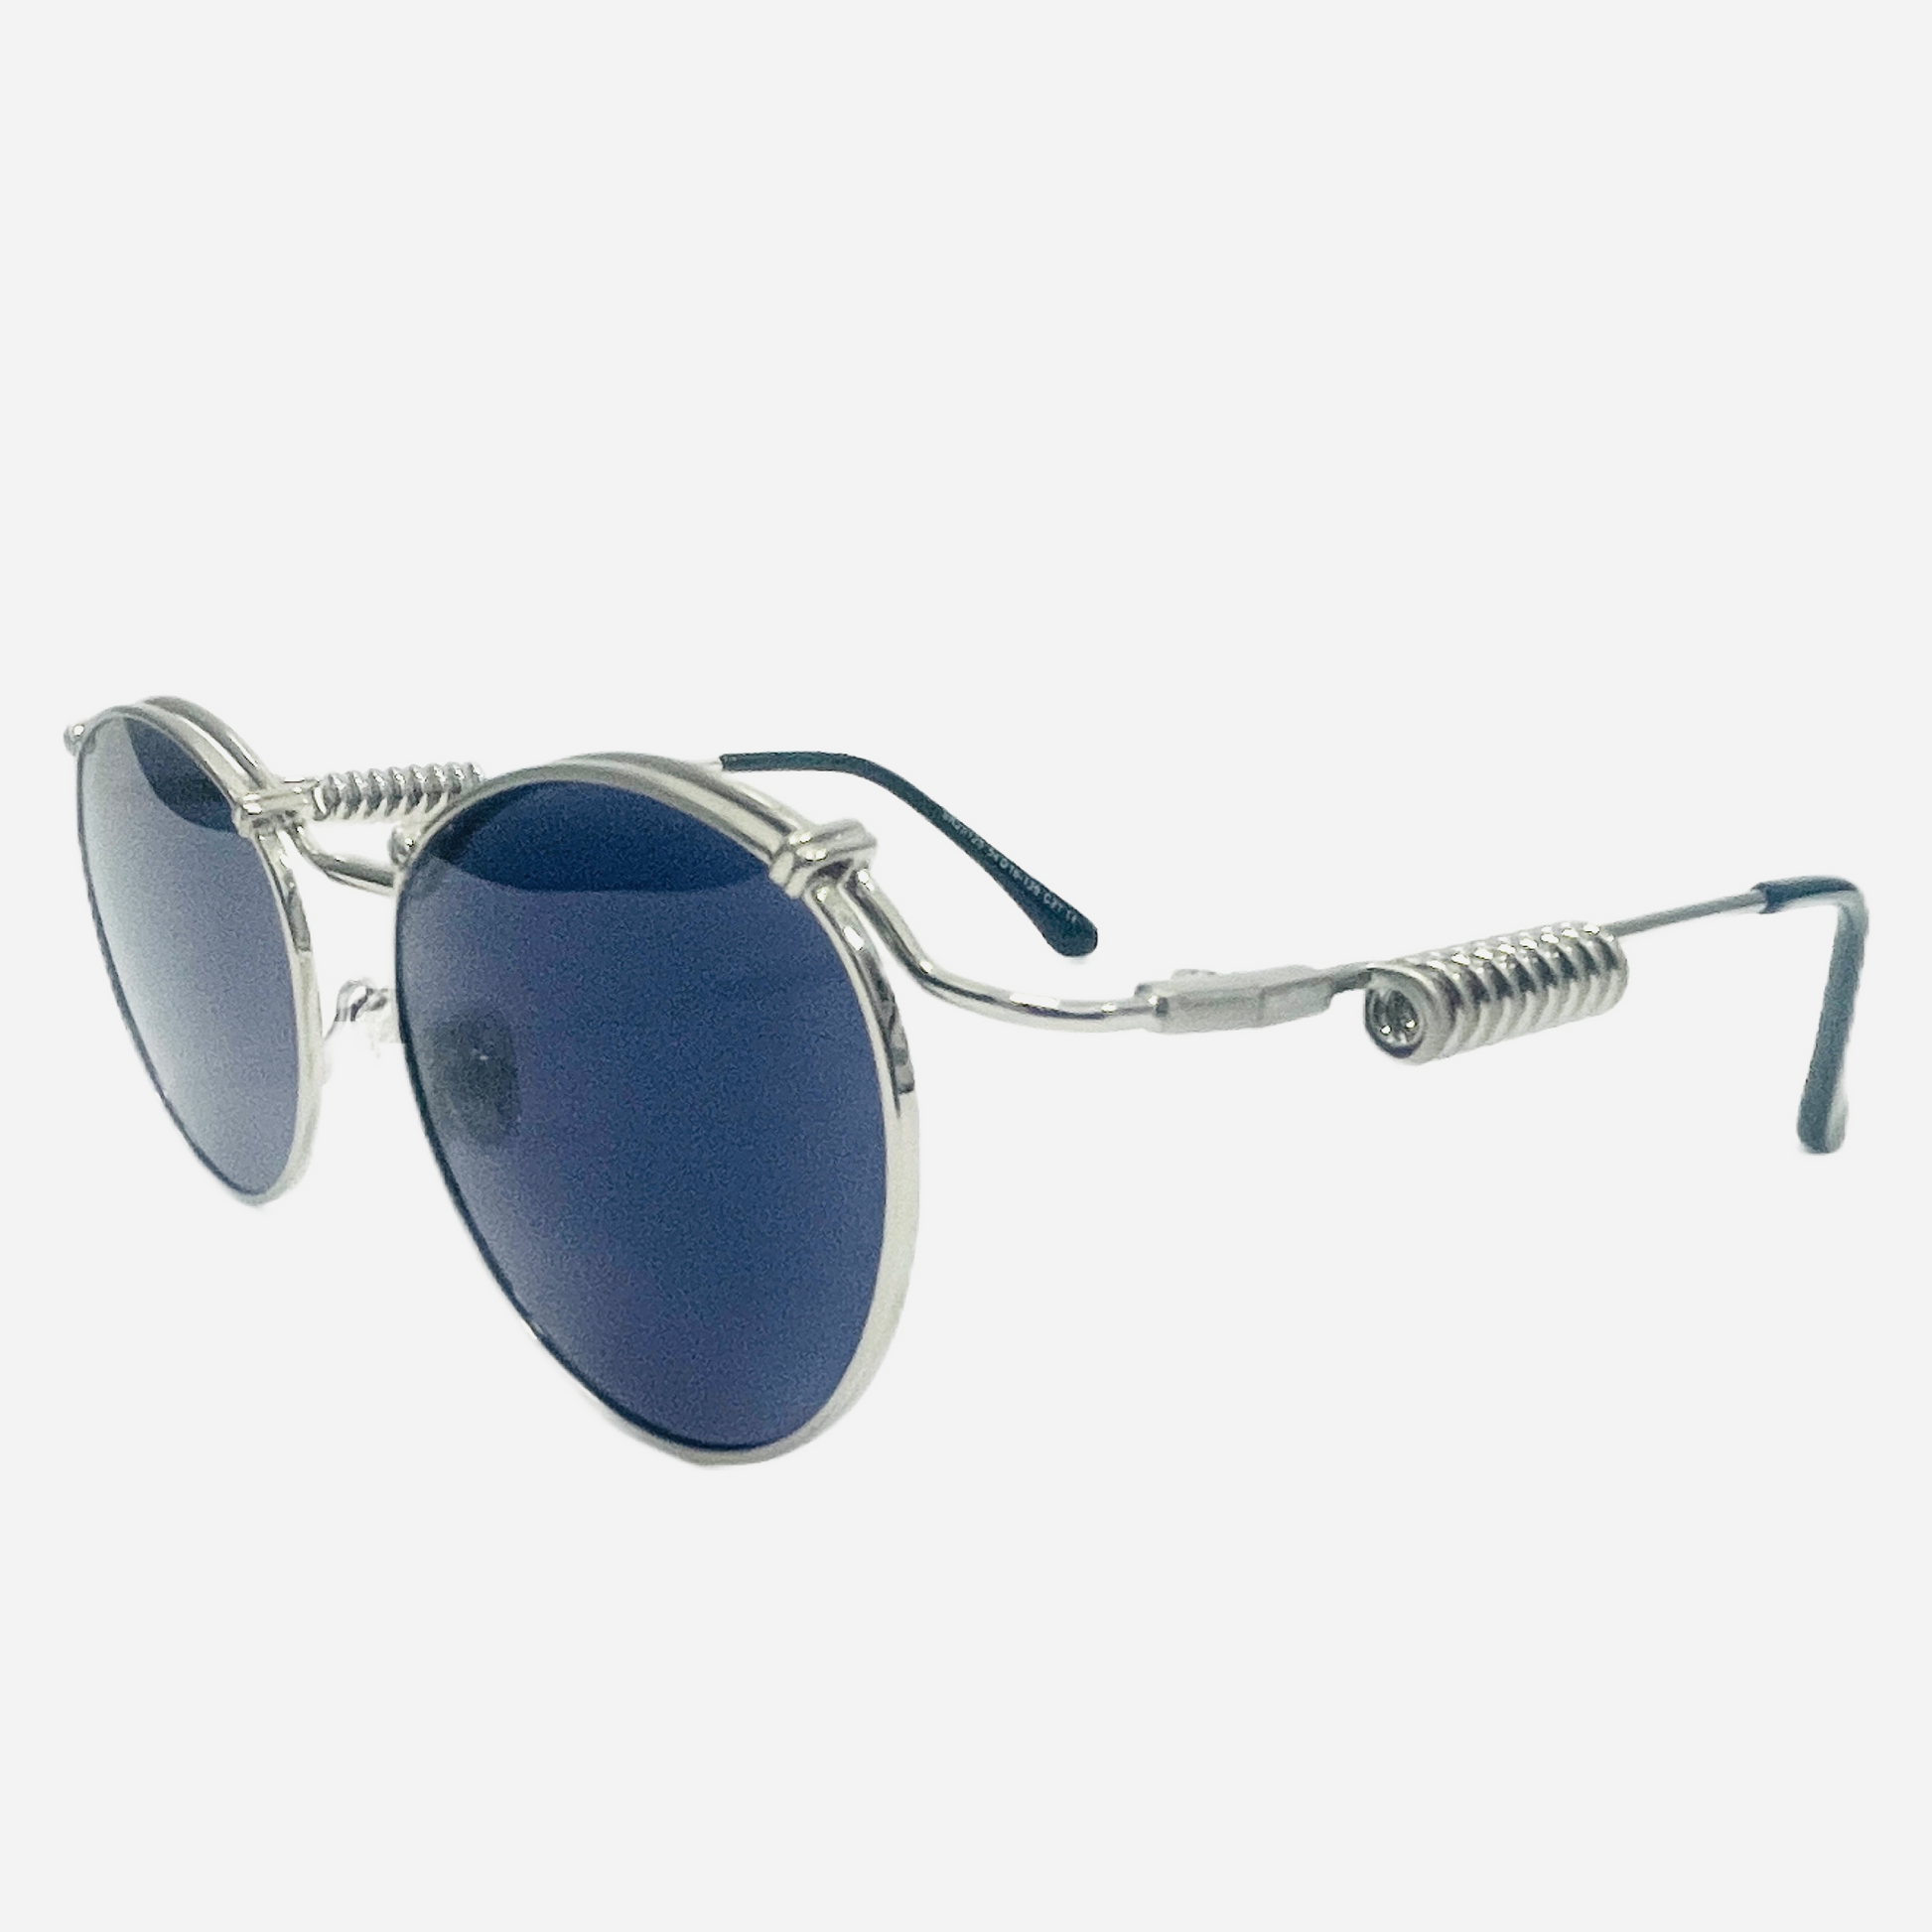 Vintage-Jean-Paul-Gaultier-Sonnenbrille-Sunglasses-Model-56-9174-silber-side